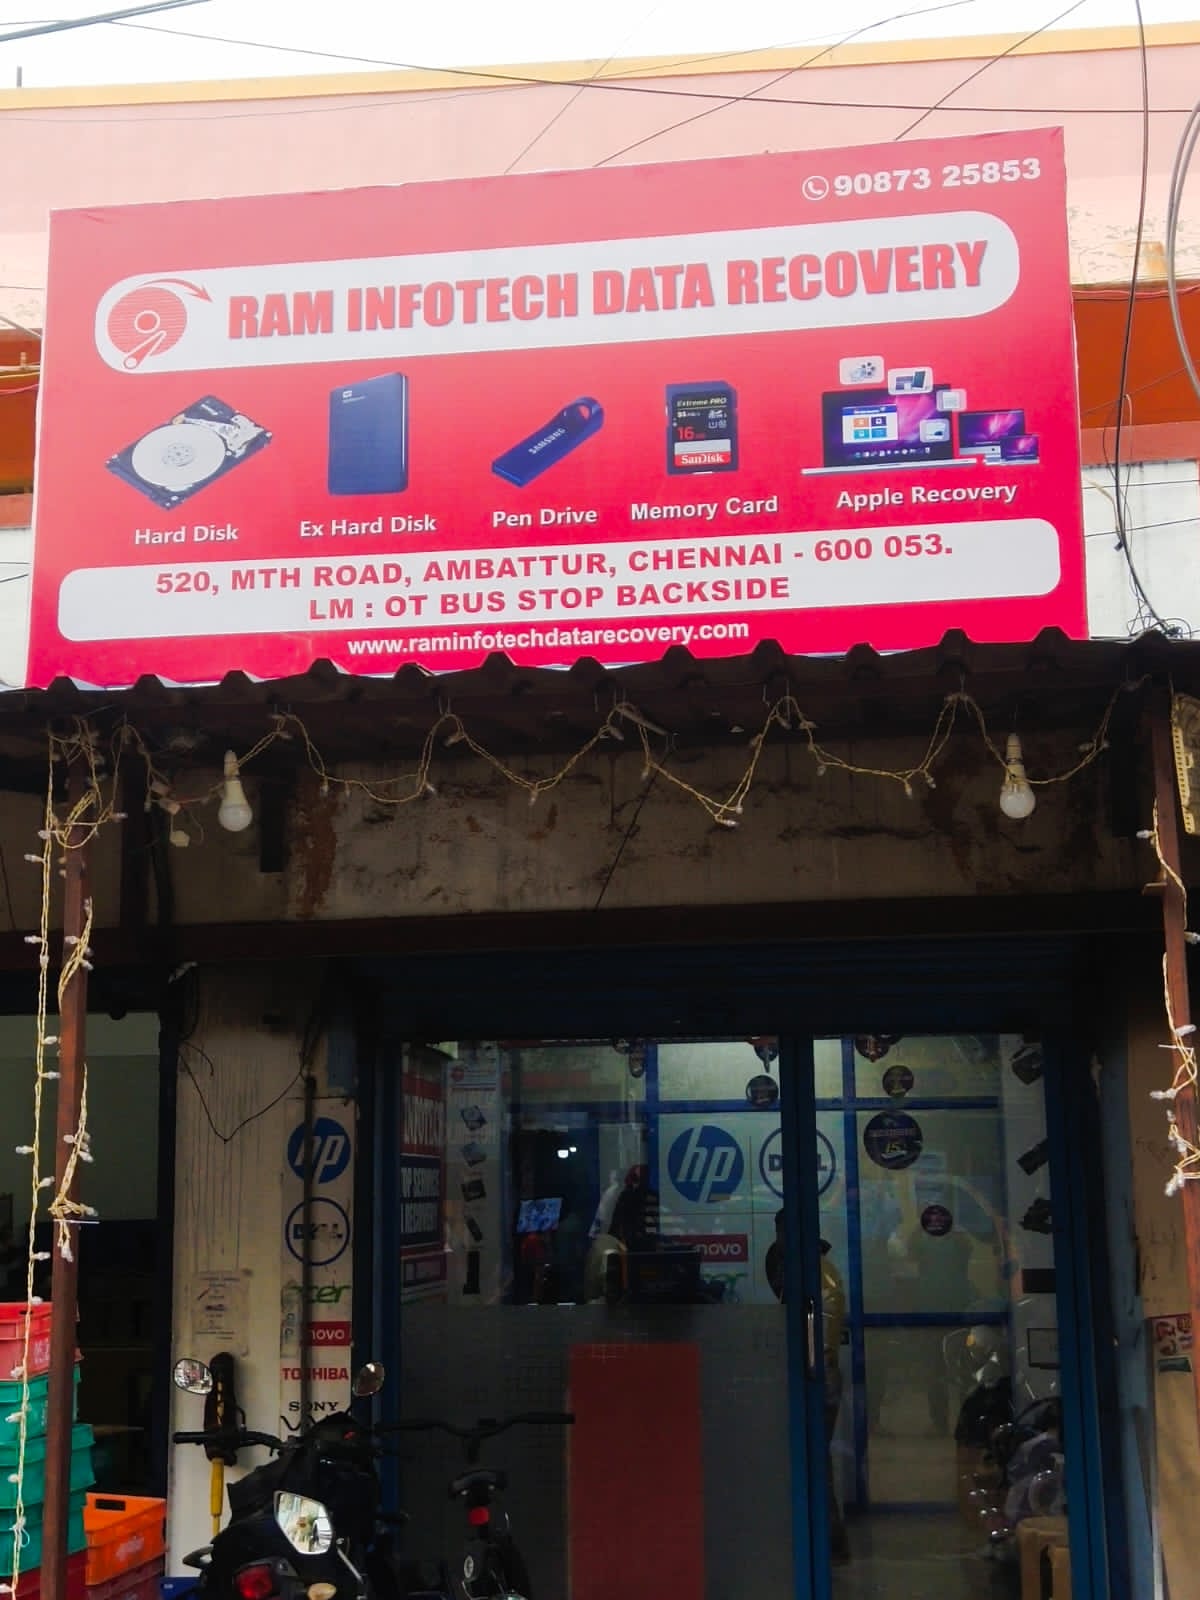 Raminfotech Data Recovery in ambattur